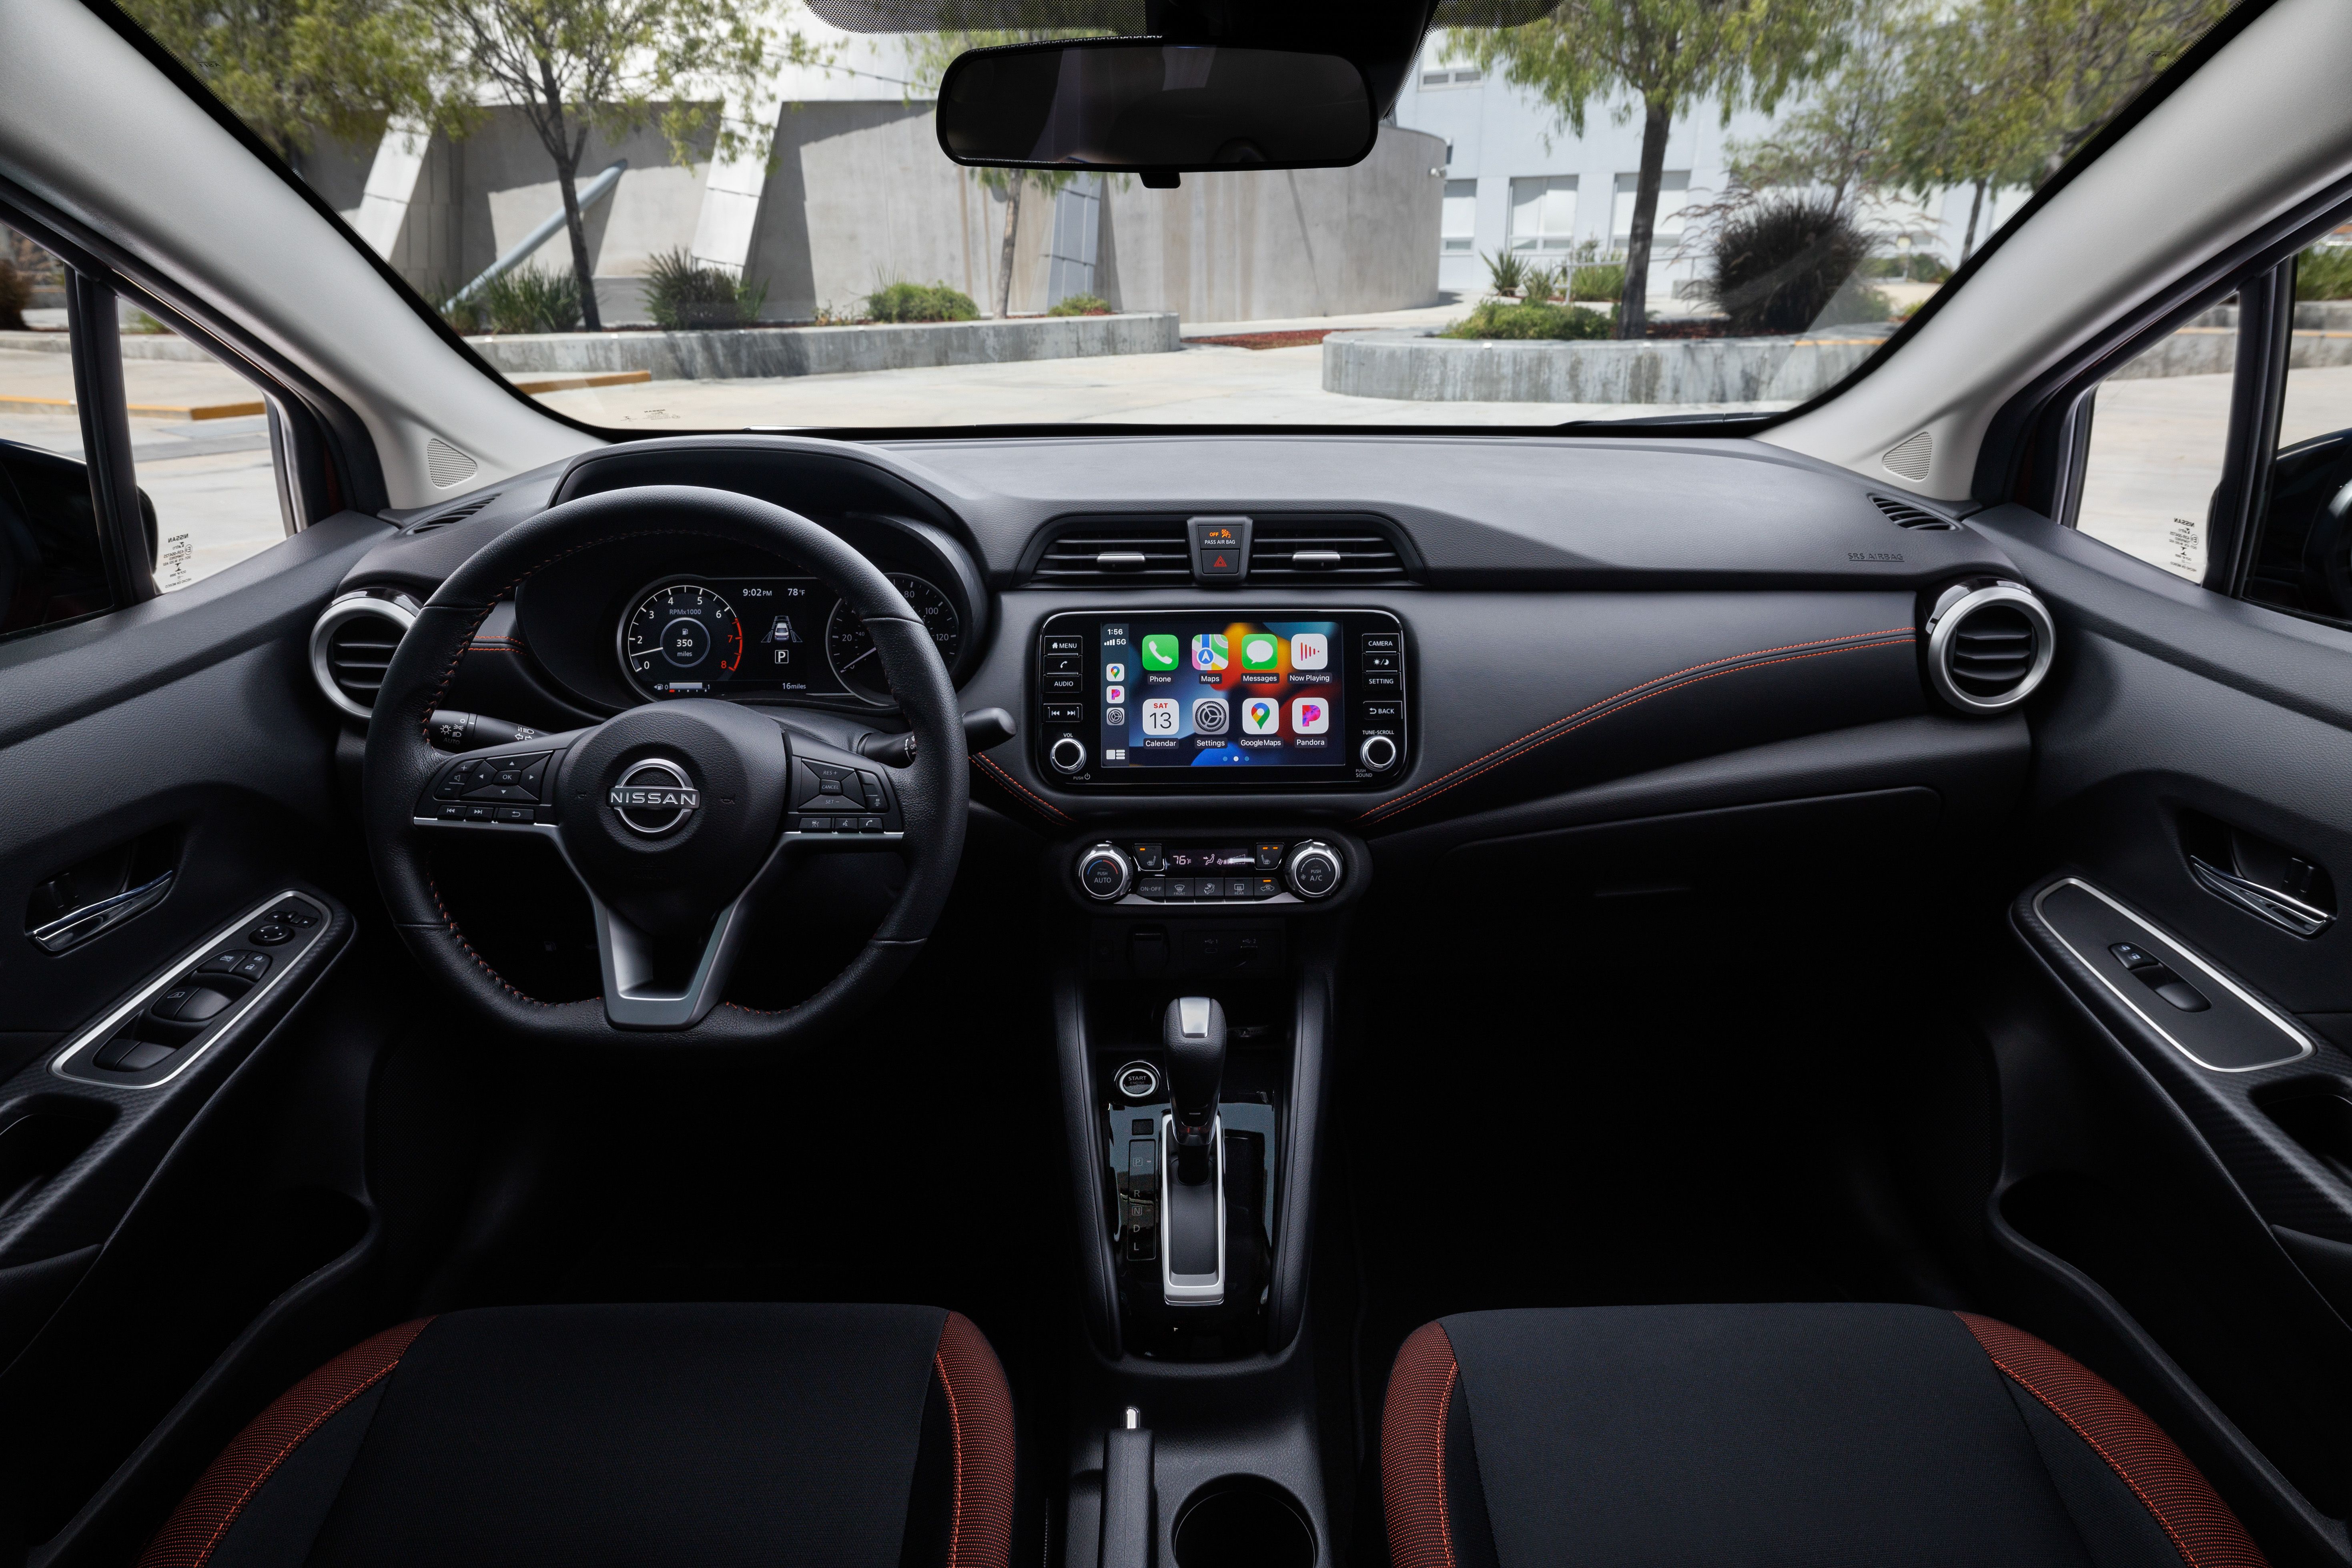 Nissan Tiida interior - Cockpit